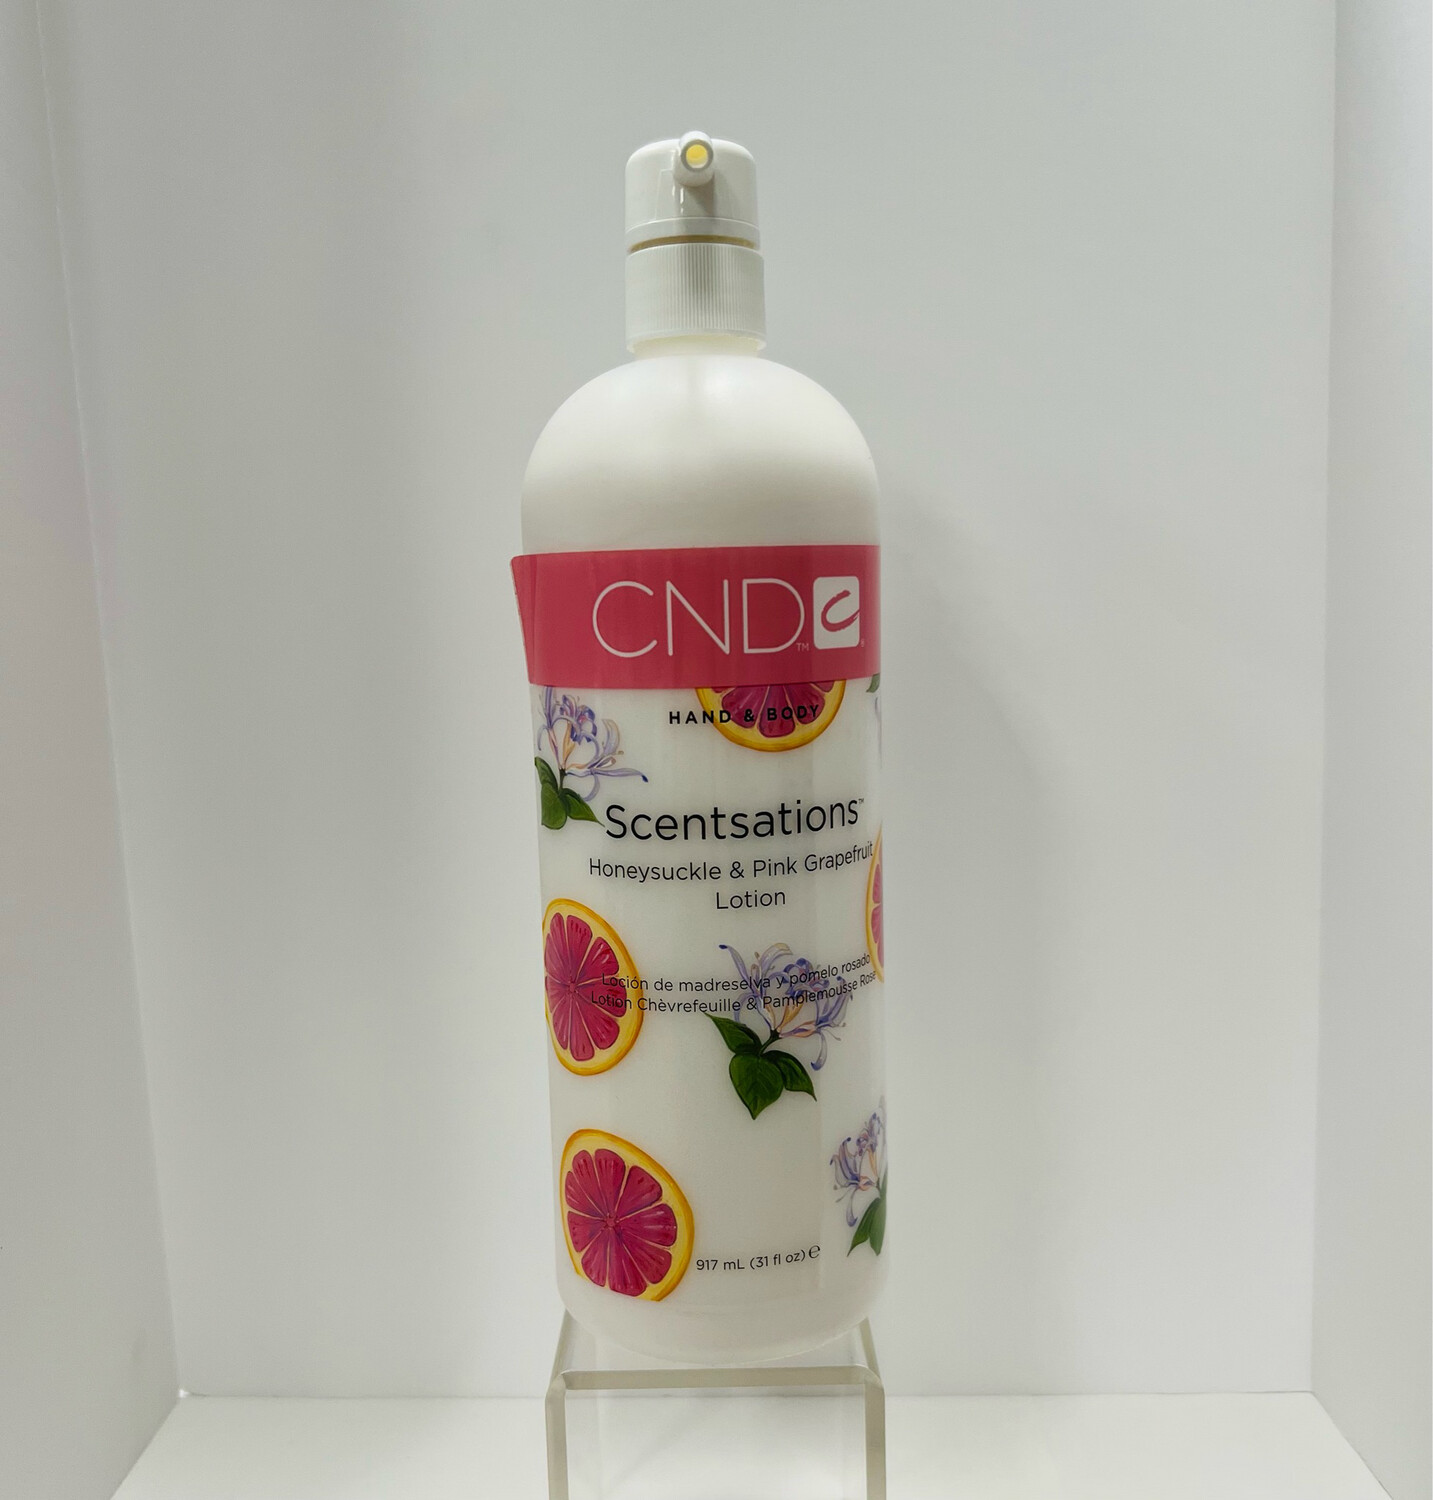 CND Scentsations Honeysuckle & Grapefruit Lotion 31oz